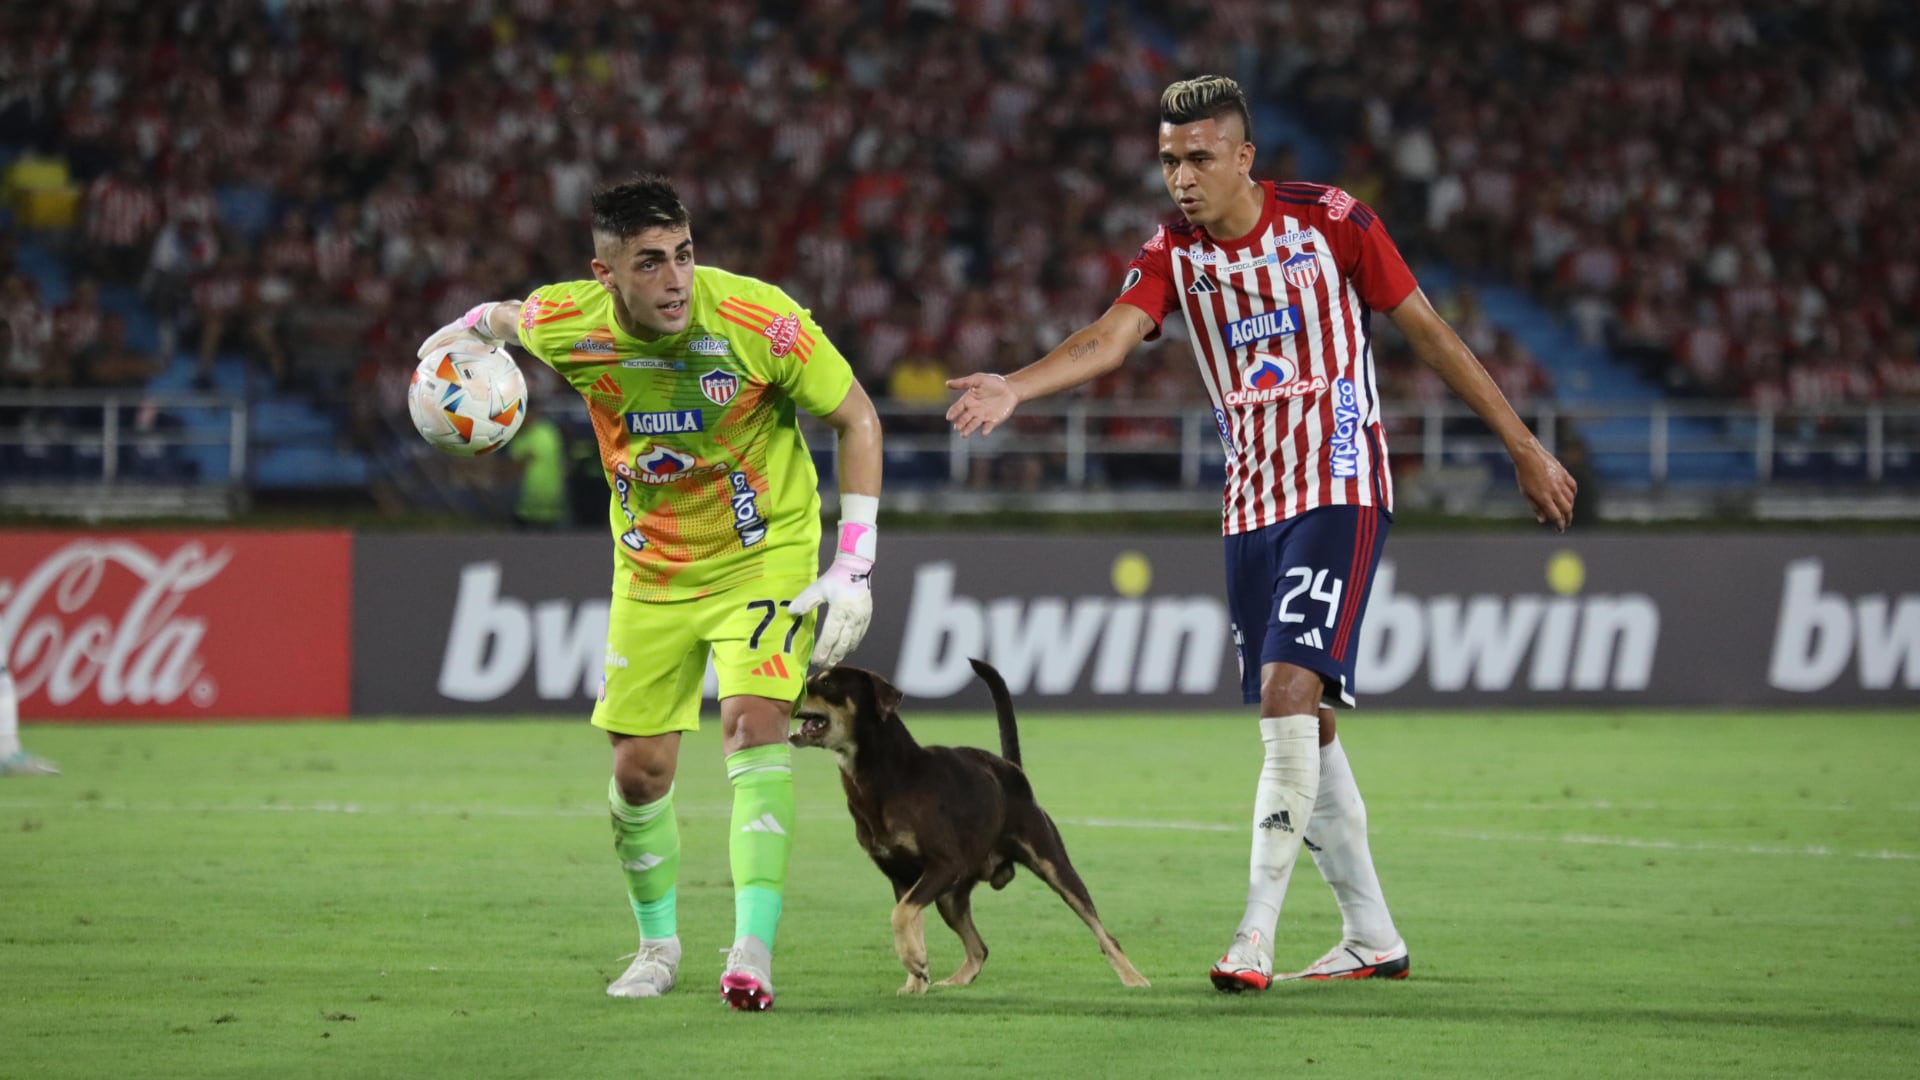 Perro le quitó el balón a un jugador del Junior en pleno partido de Copa Libertadores